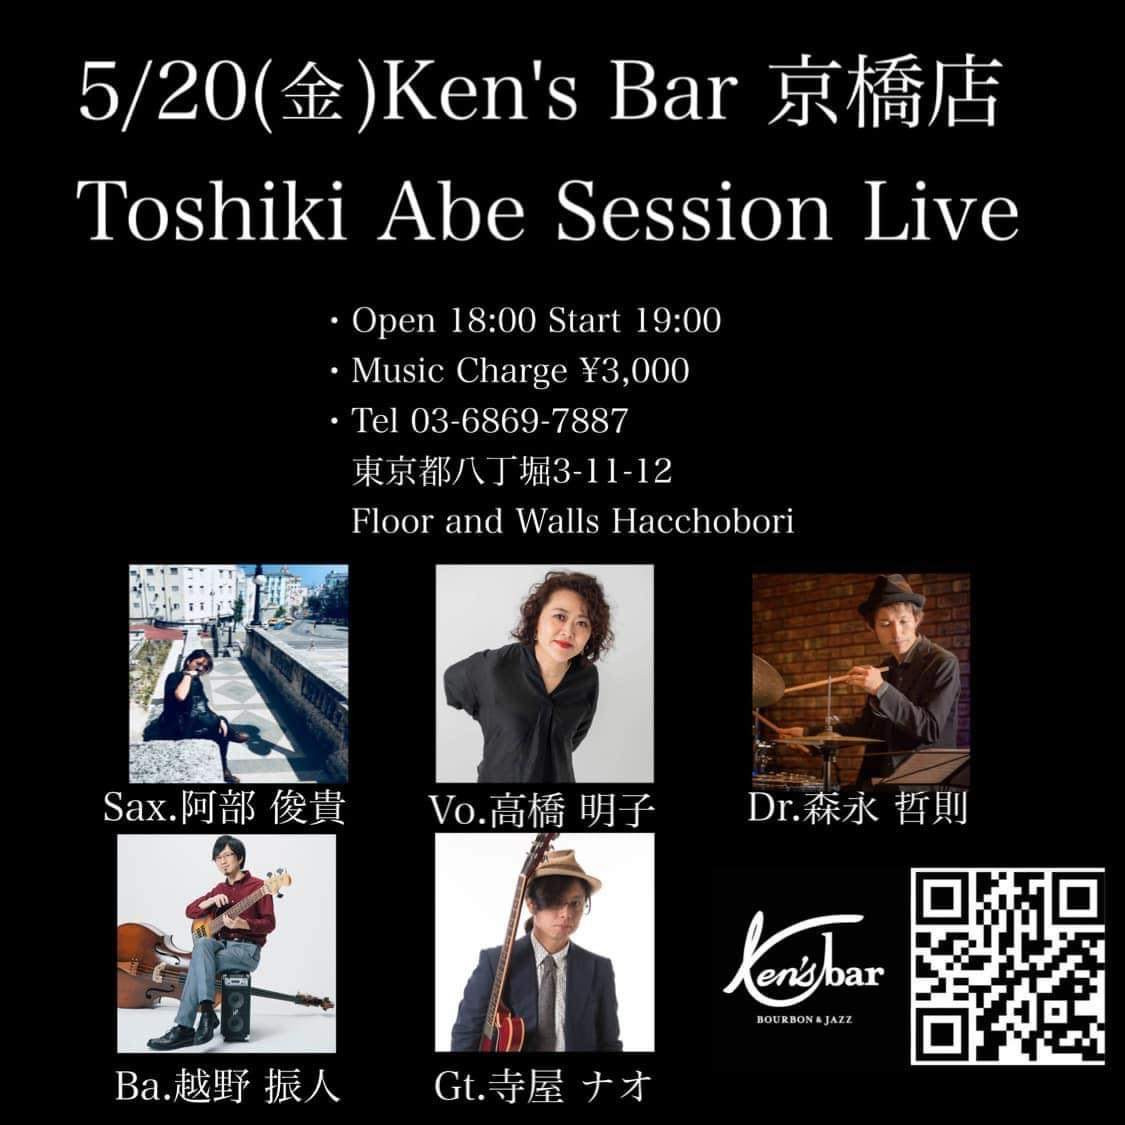 Toshiki Abe Session Live